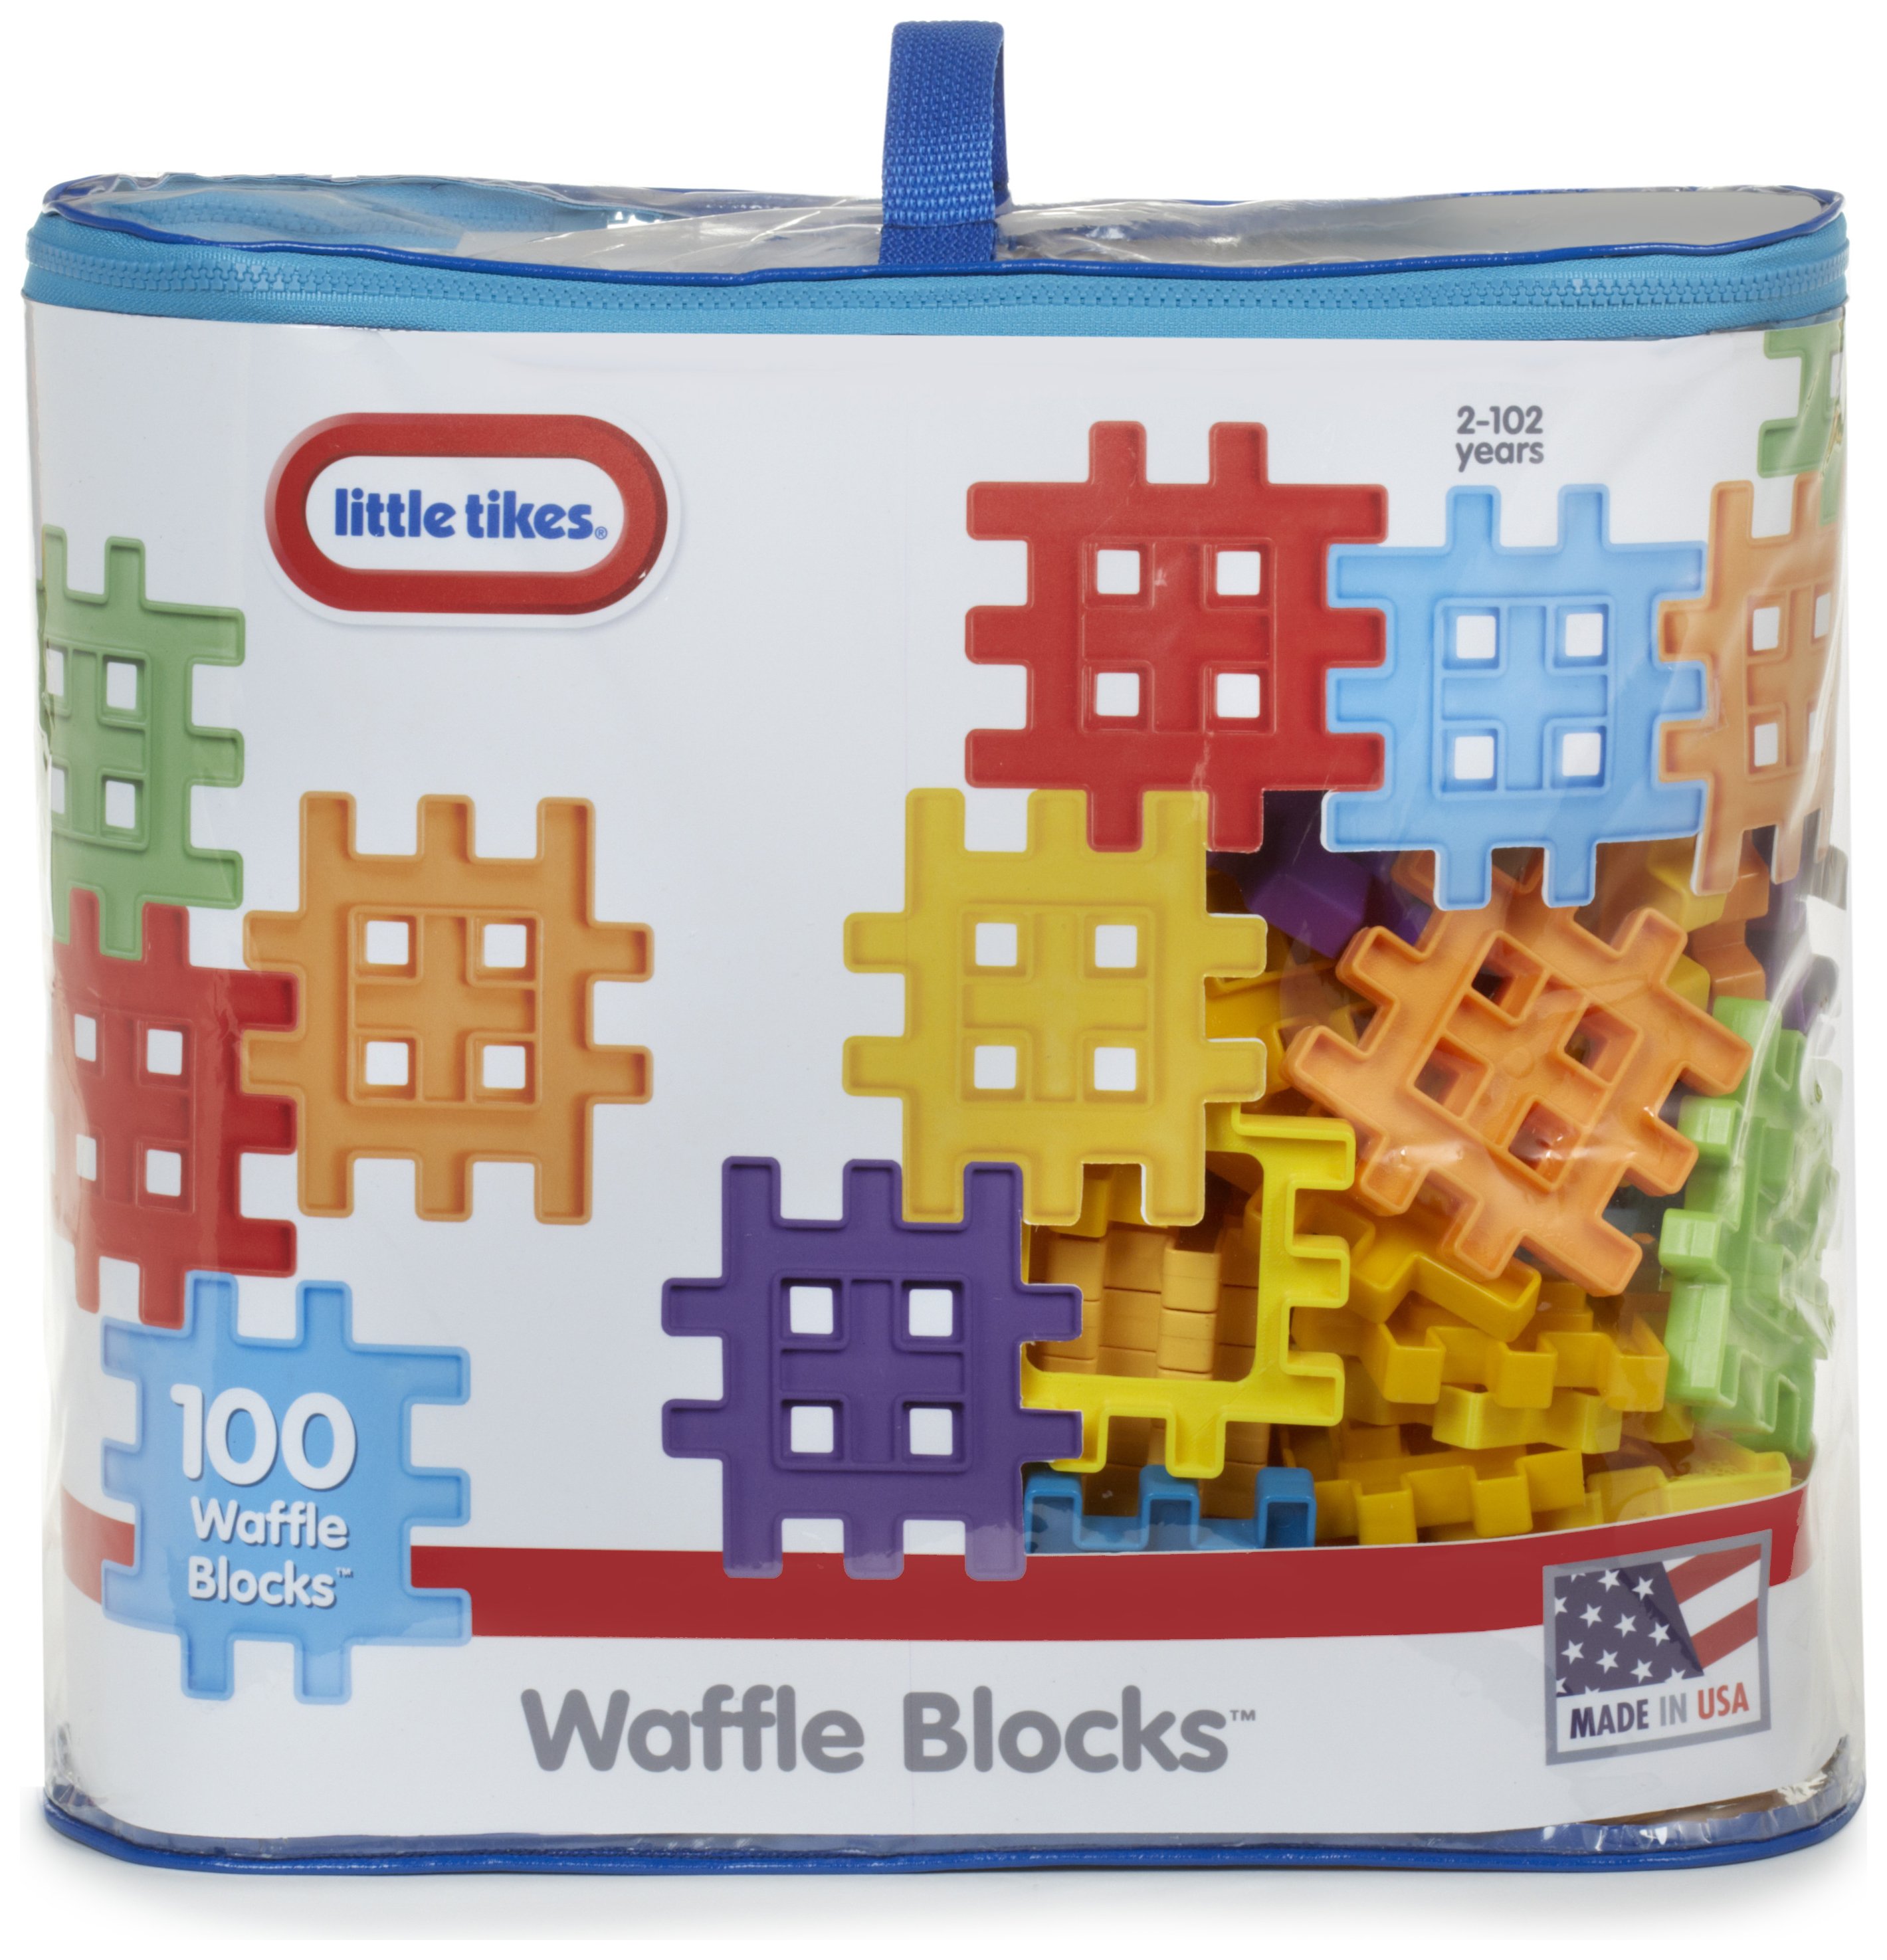 Little Tikes Waffle Blocks Bag - 100 Piece